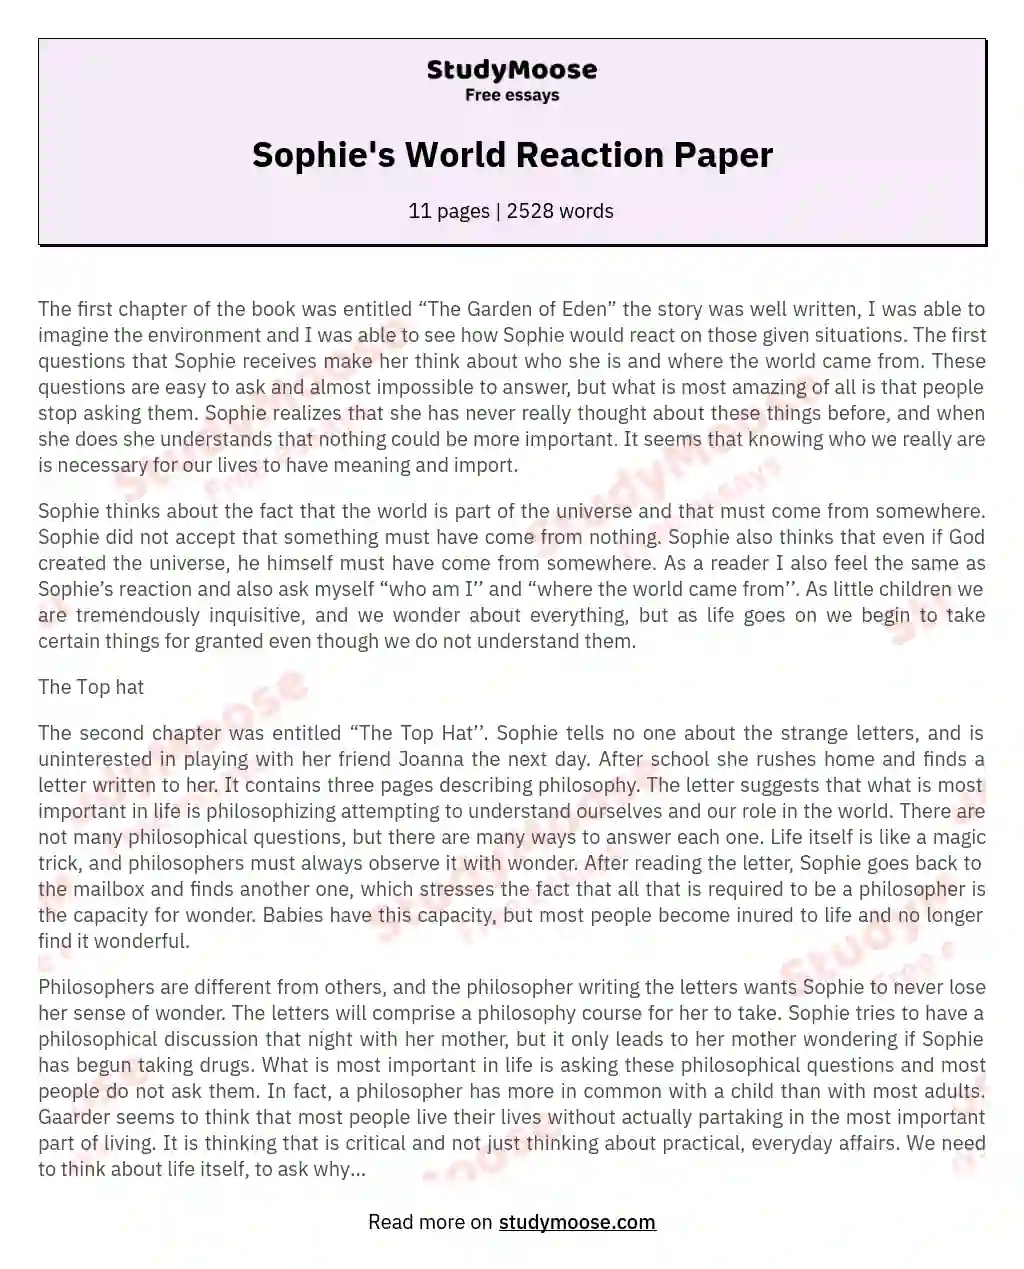 Sophie's World Reaction Paper essay